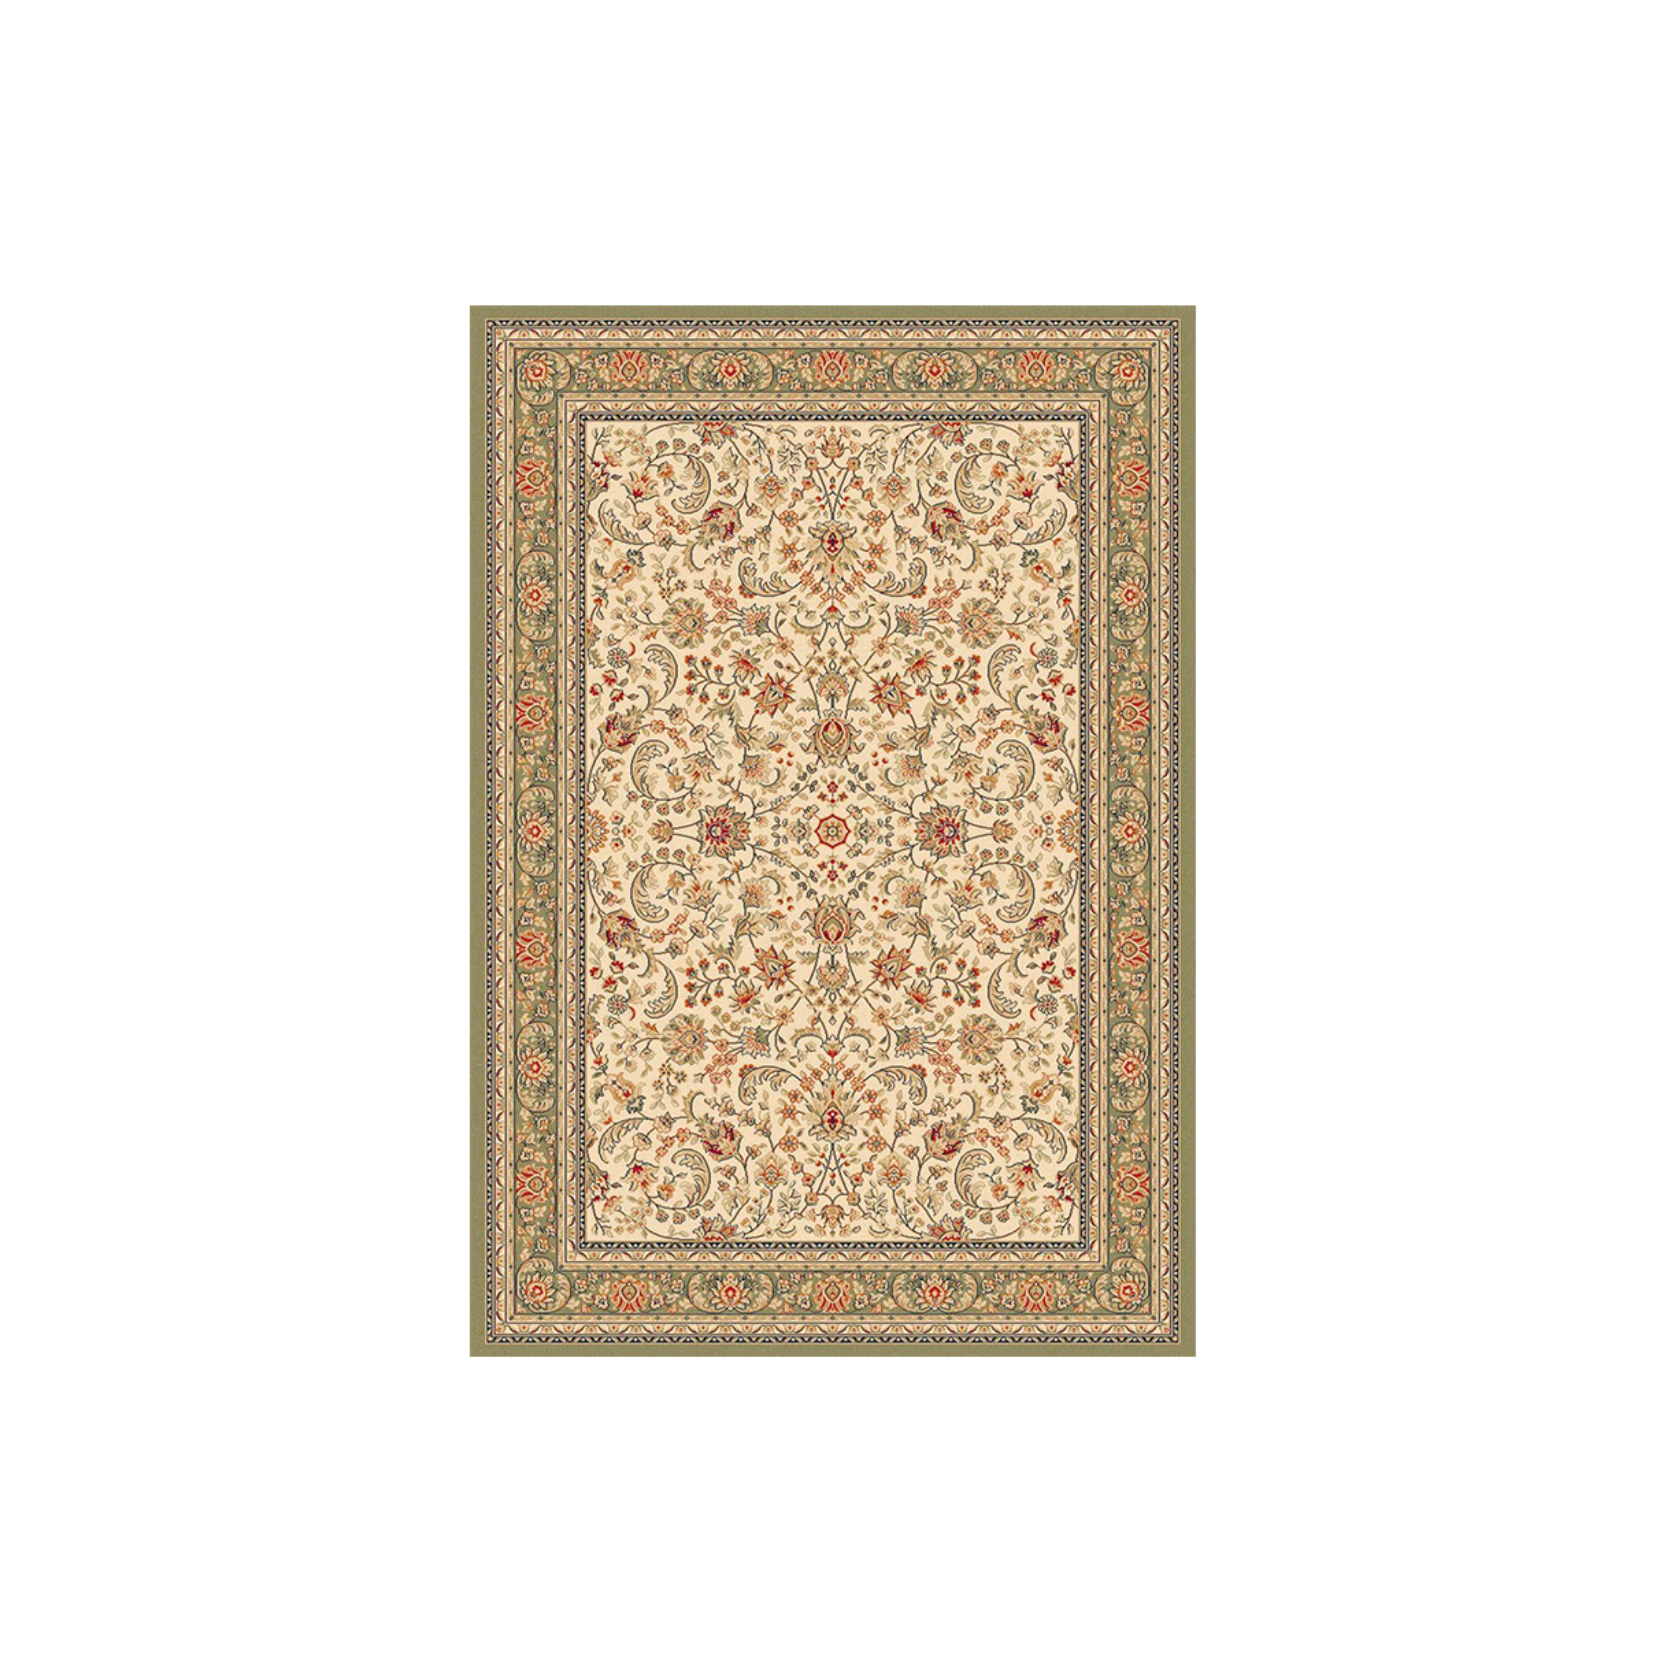 Classic rug - 22060 - STARK CARPET - patterned / wool / rectangular